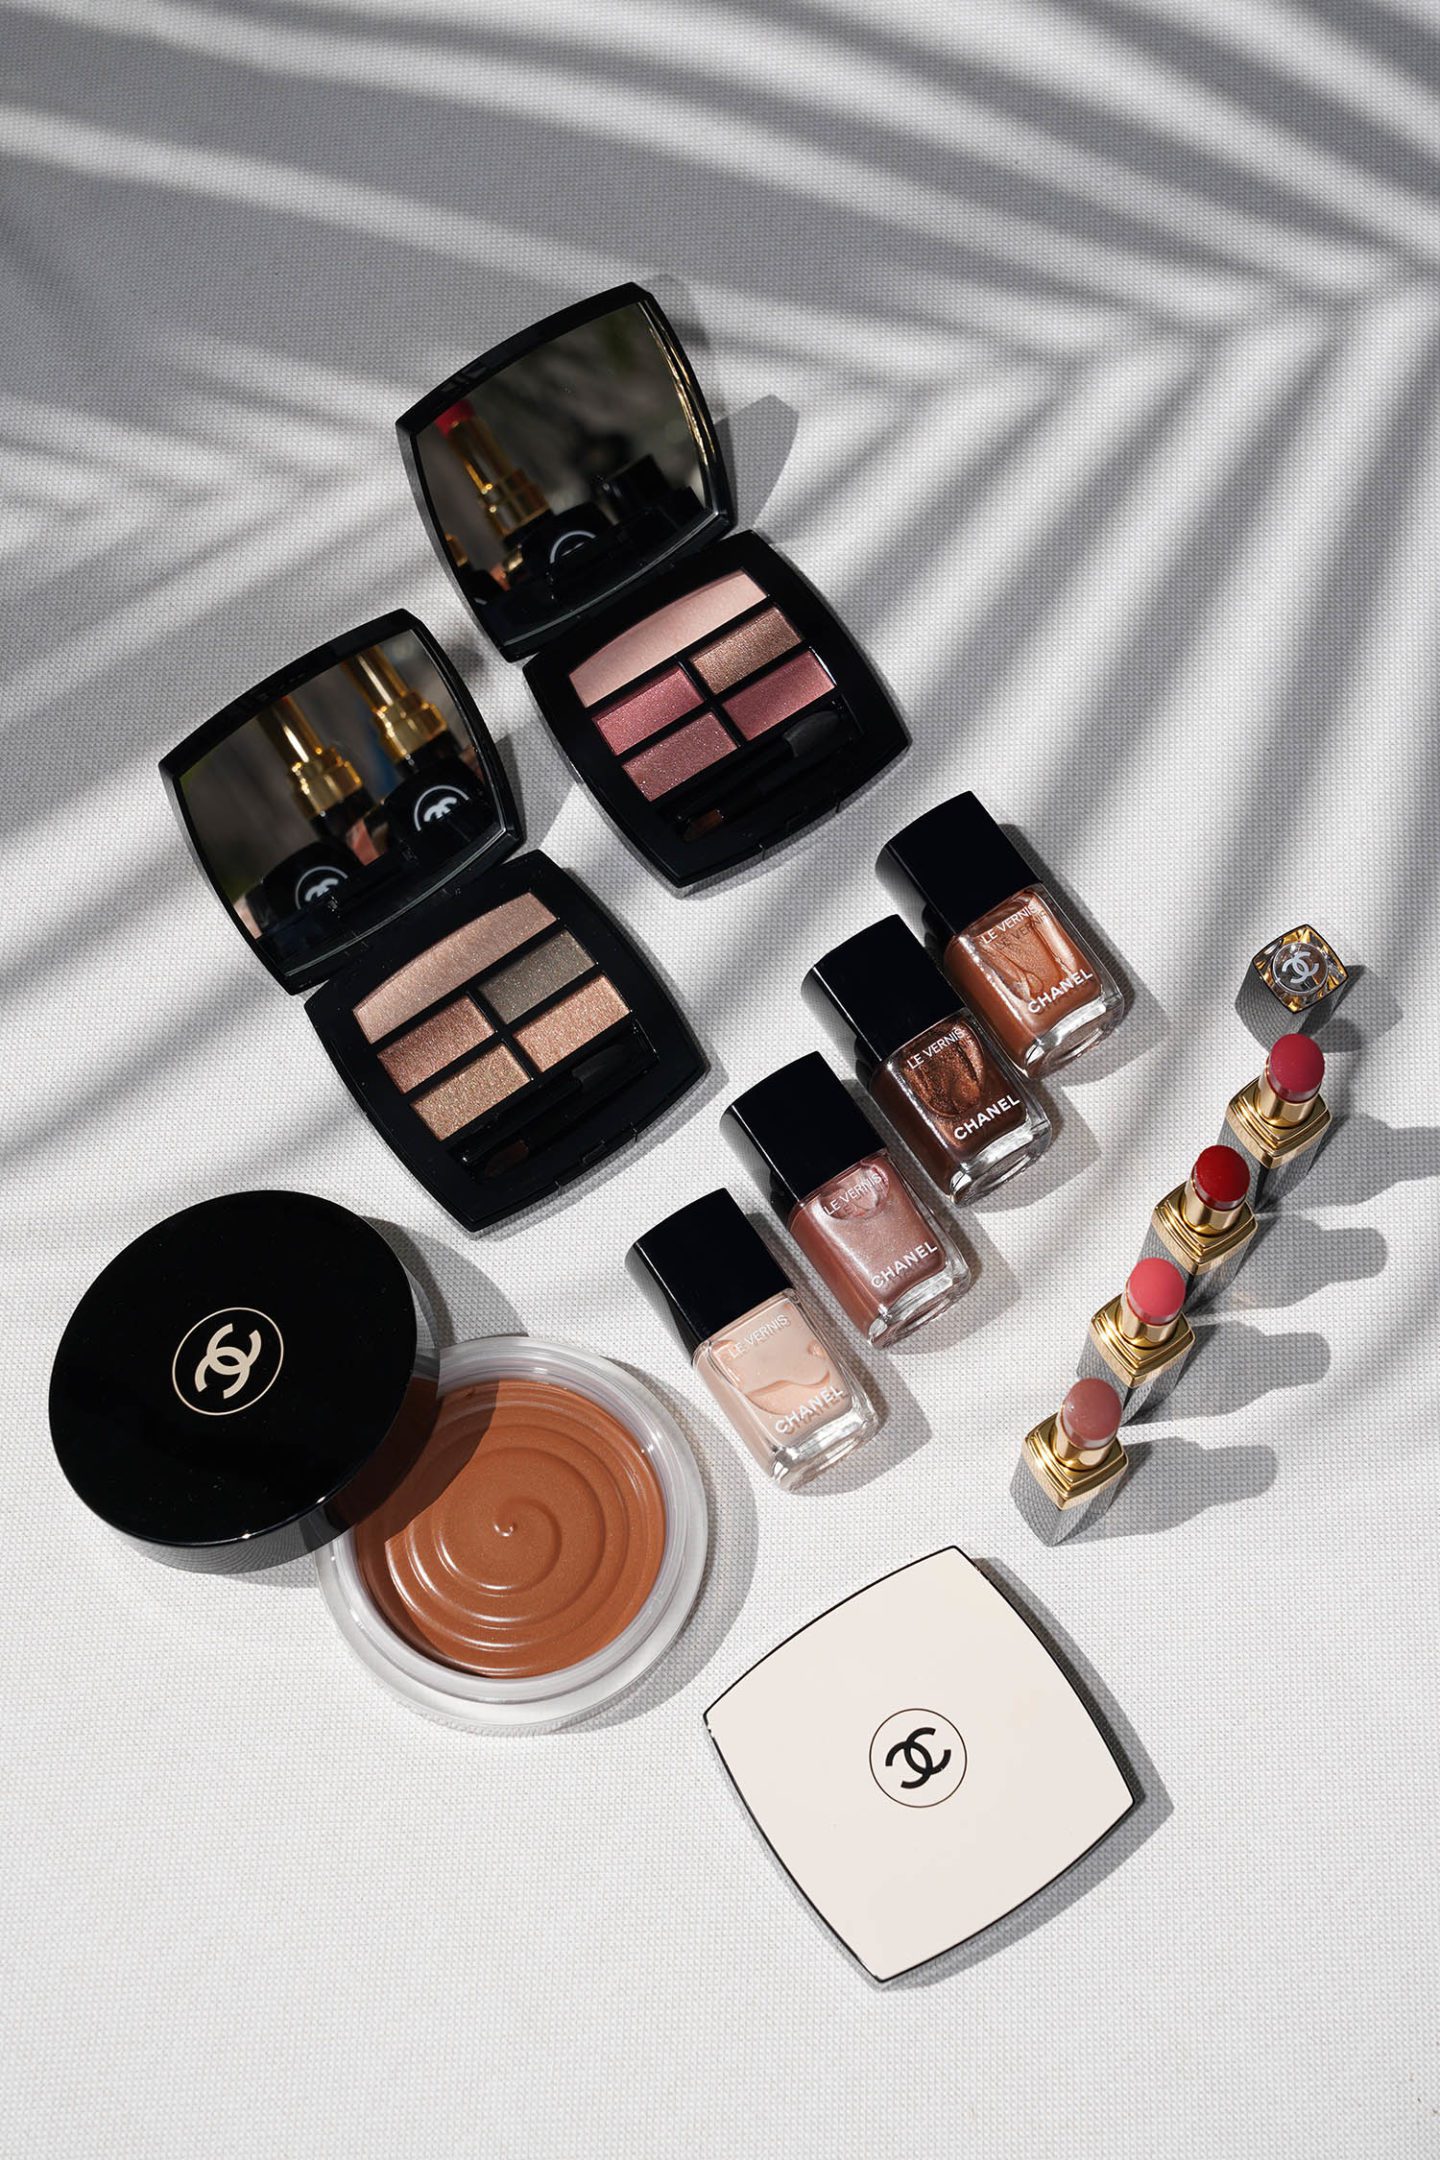 Chanel Les Beiges Summer Light 2021 Beauty Lookbook